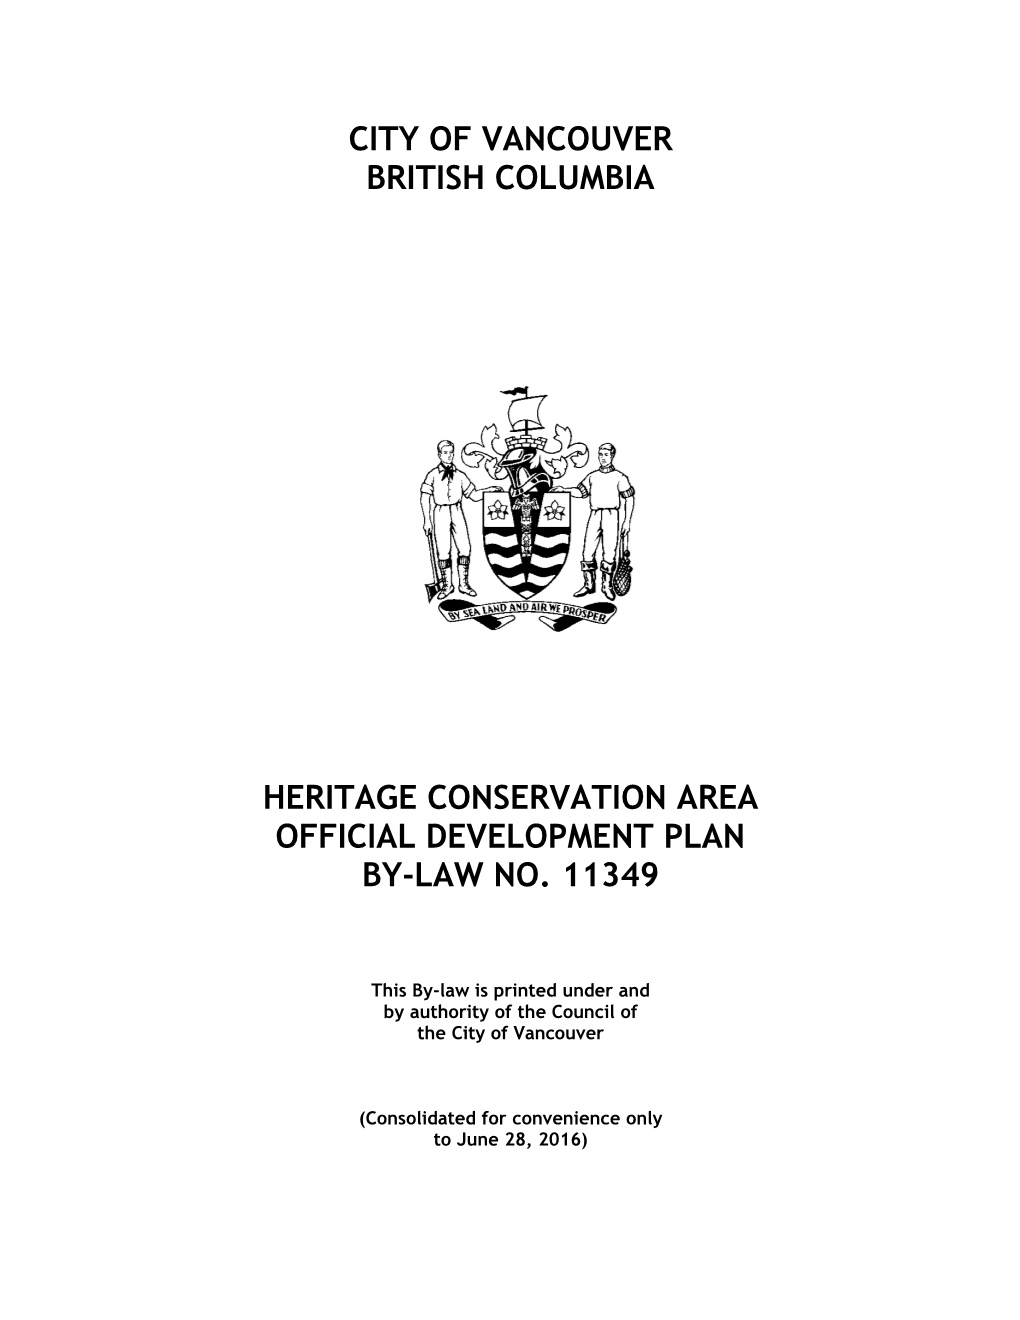 City of Vancouver British Columbia Heritage